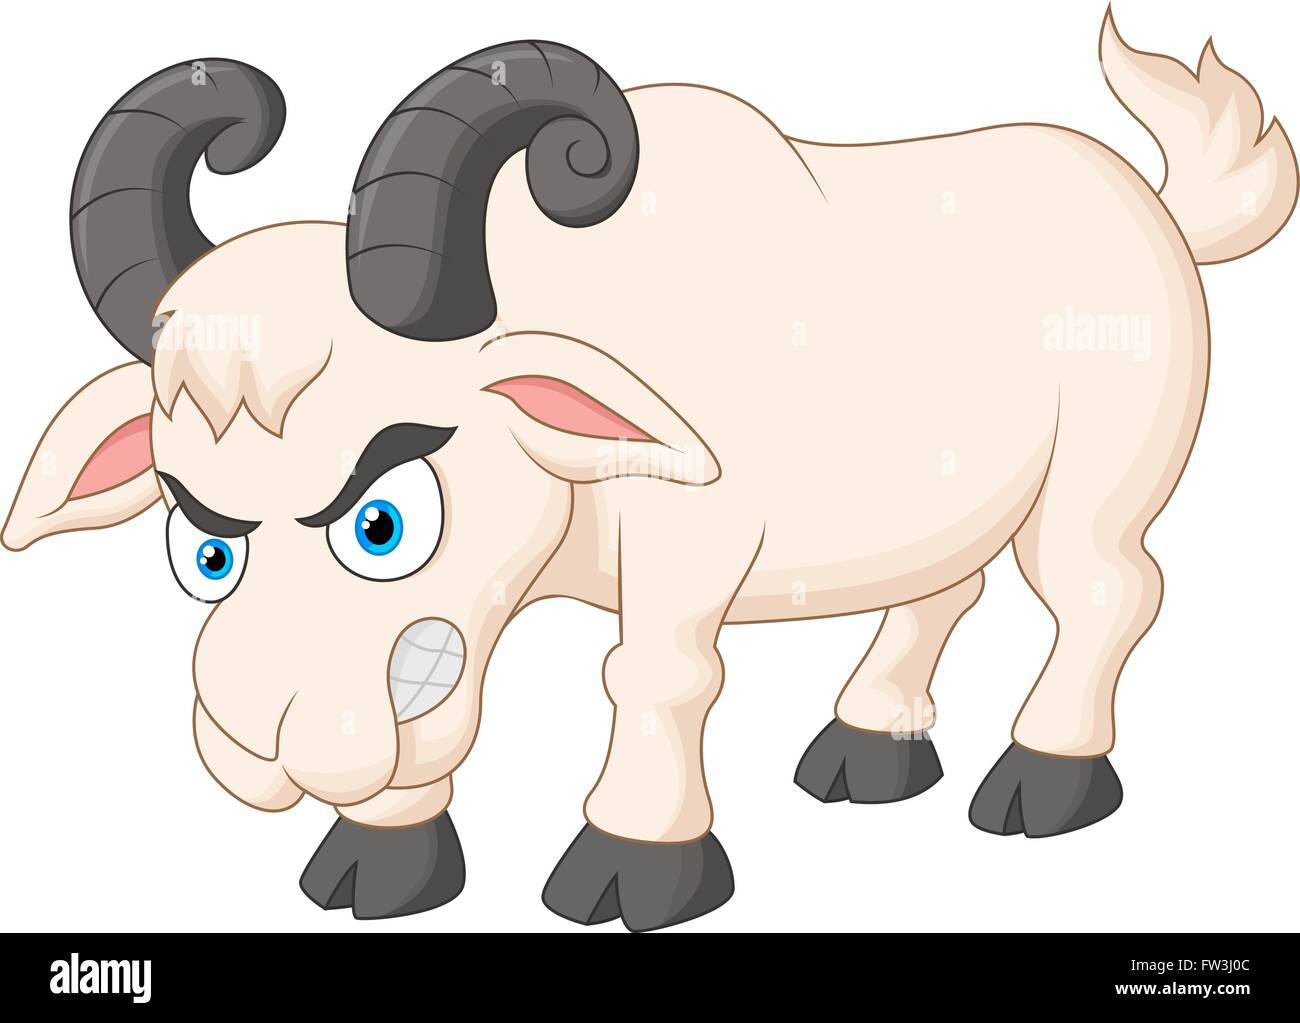 angry goat cartoon